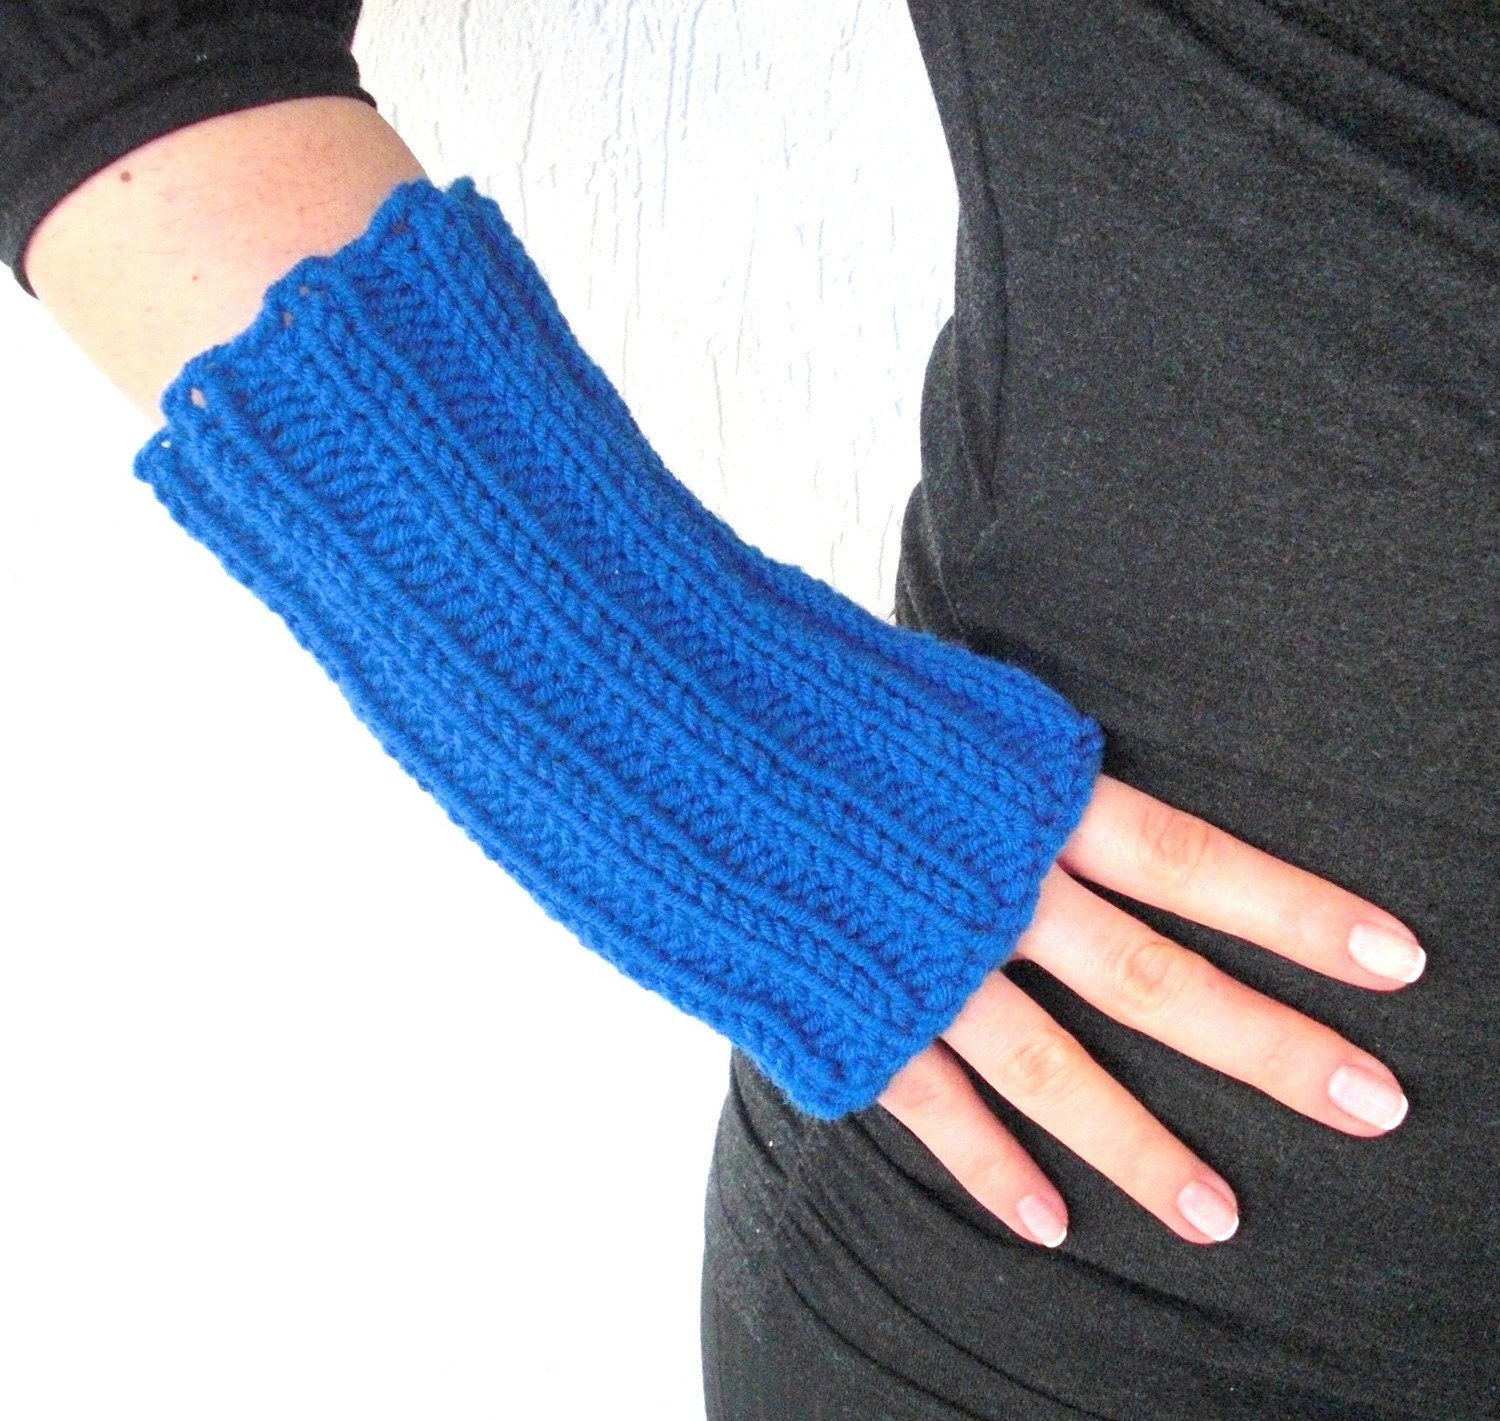 knitting: Pattern Review: Convertible Mittens, aka fingerless